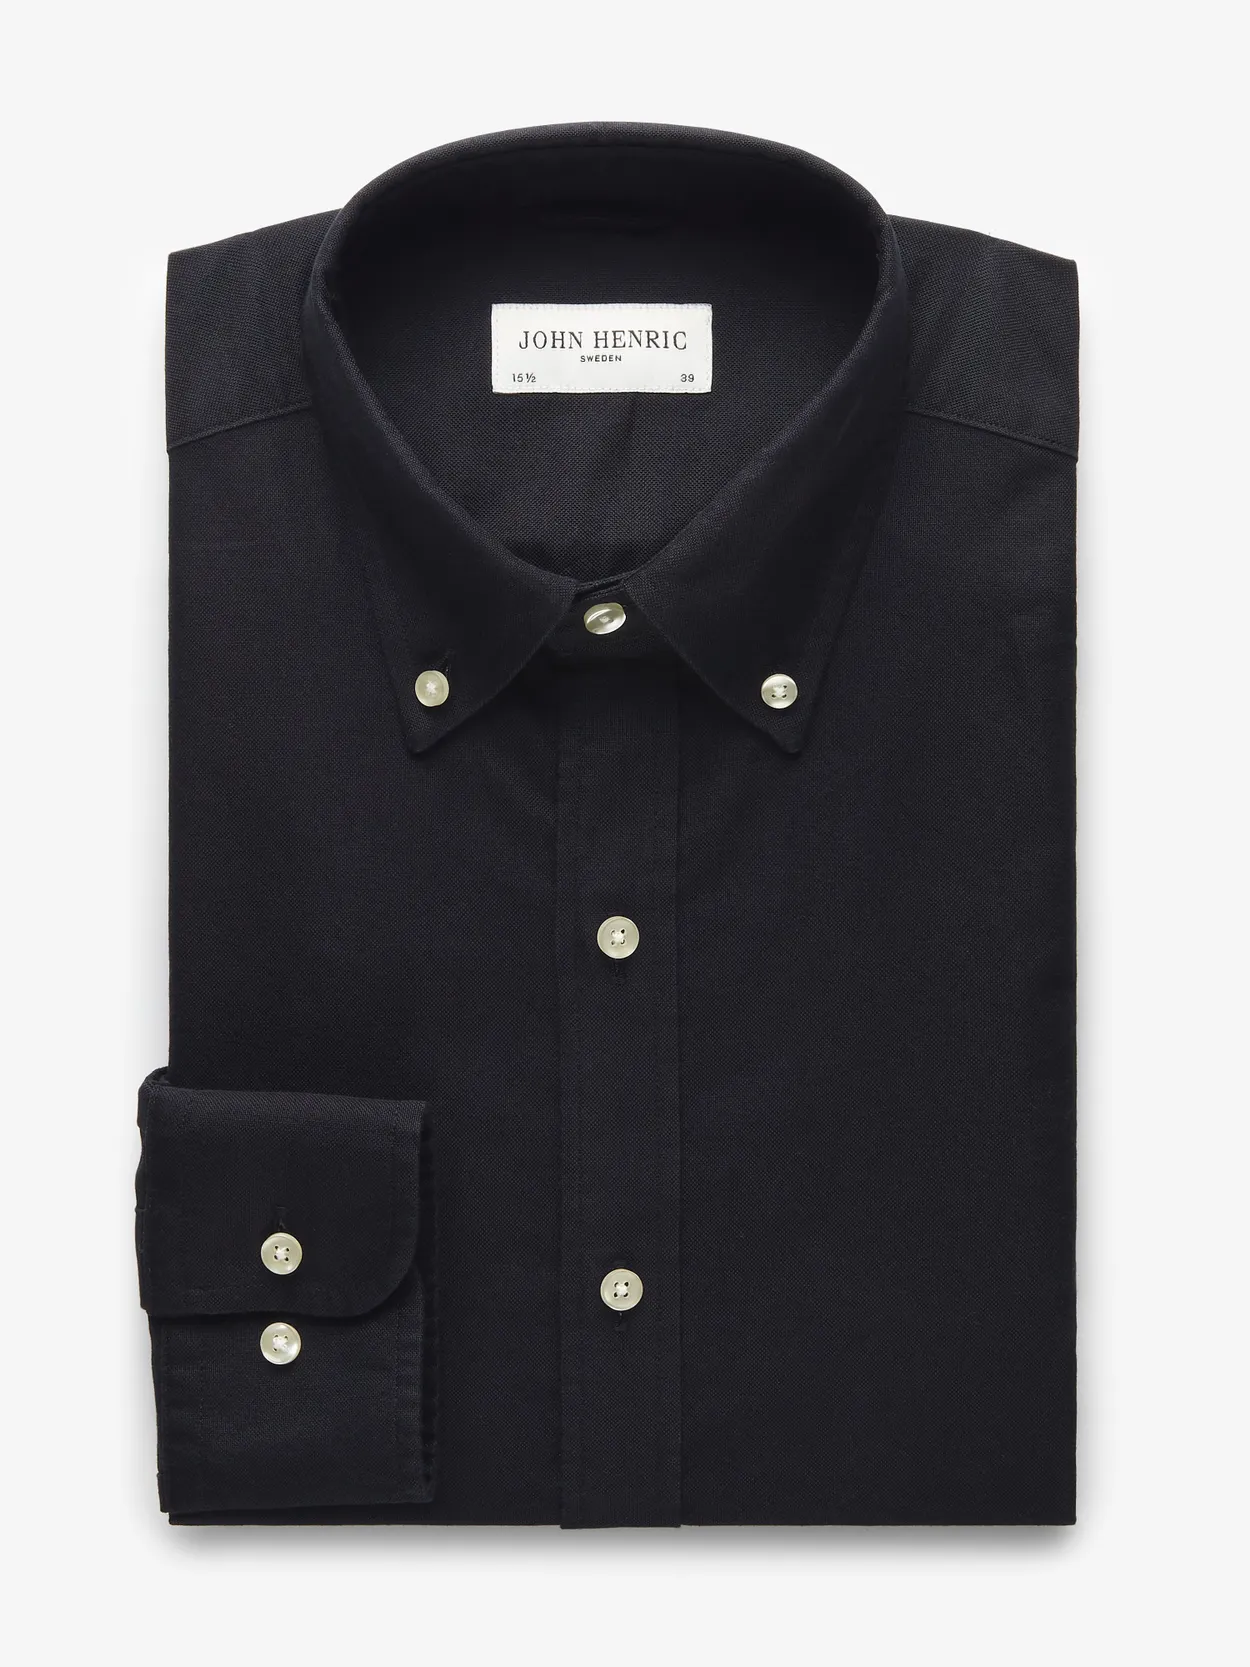 Black Oxford Shirt